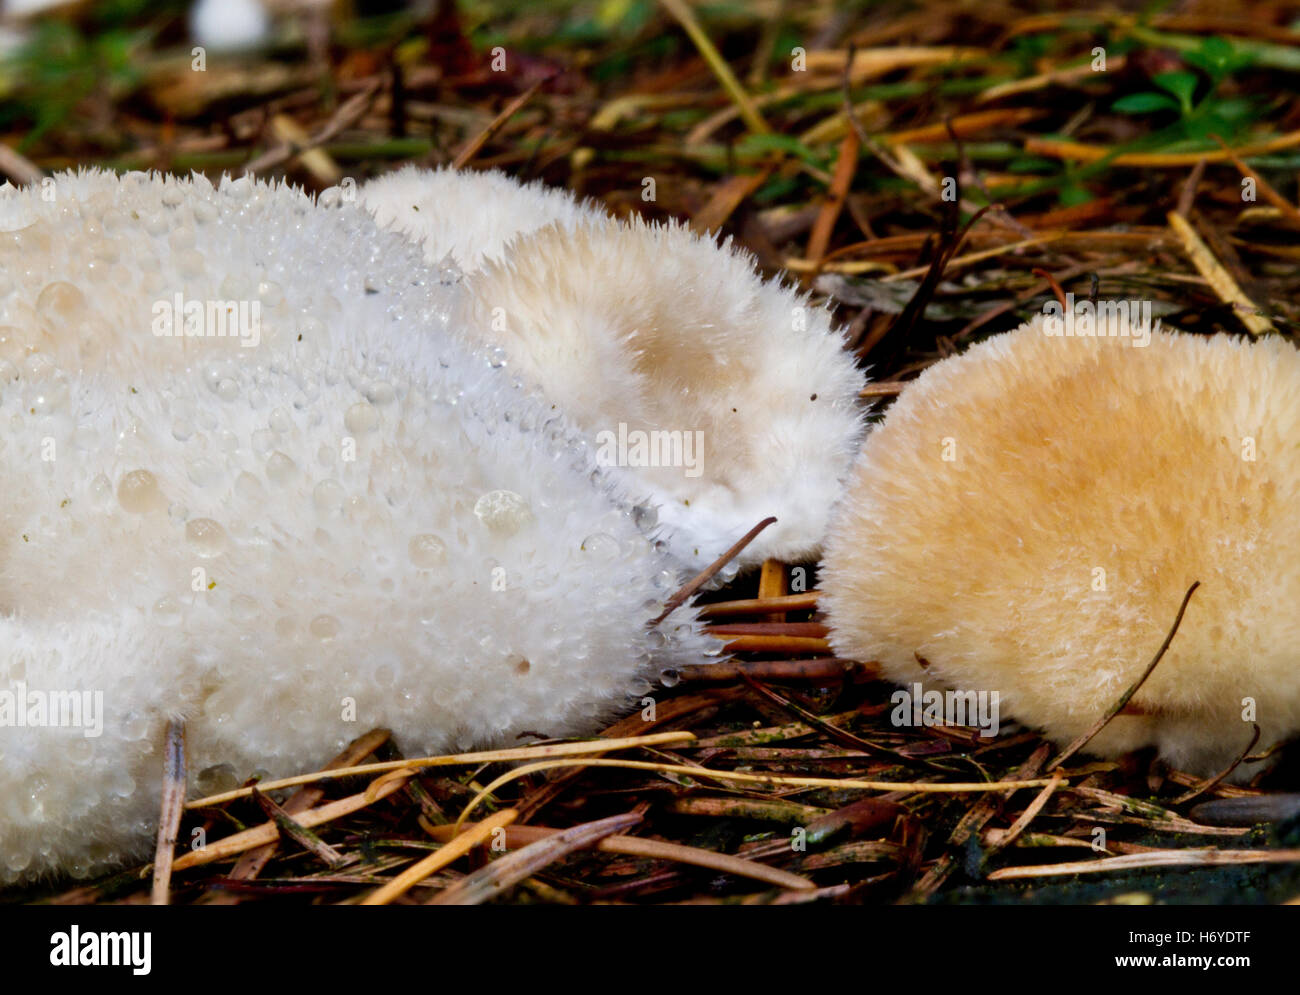 Some slime molds (Oligoporus ptychogaster) on pine needles Stock Photo